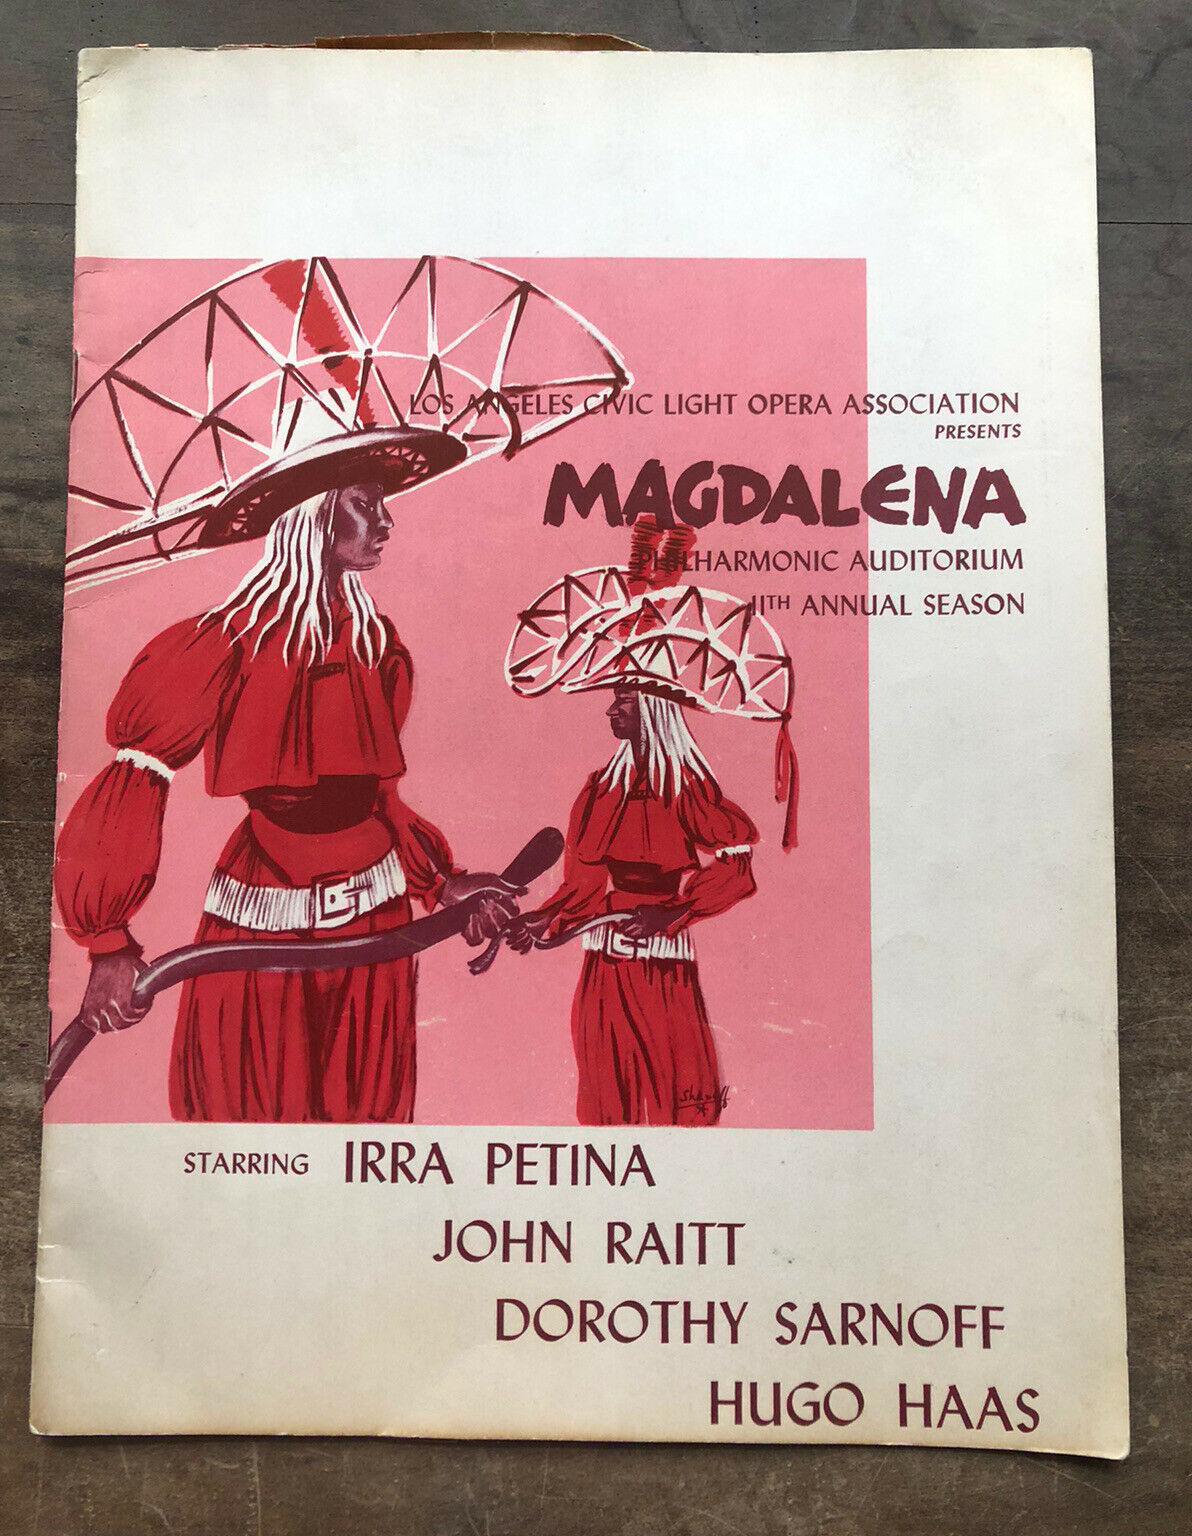 1948 Los Angeles Civic Light Opera Program - MAGDALENA - John Raitt, Irra Petina